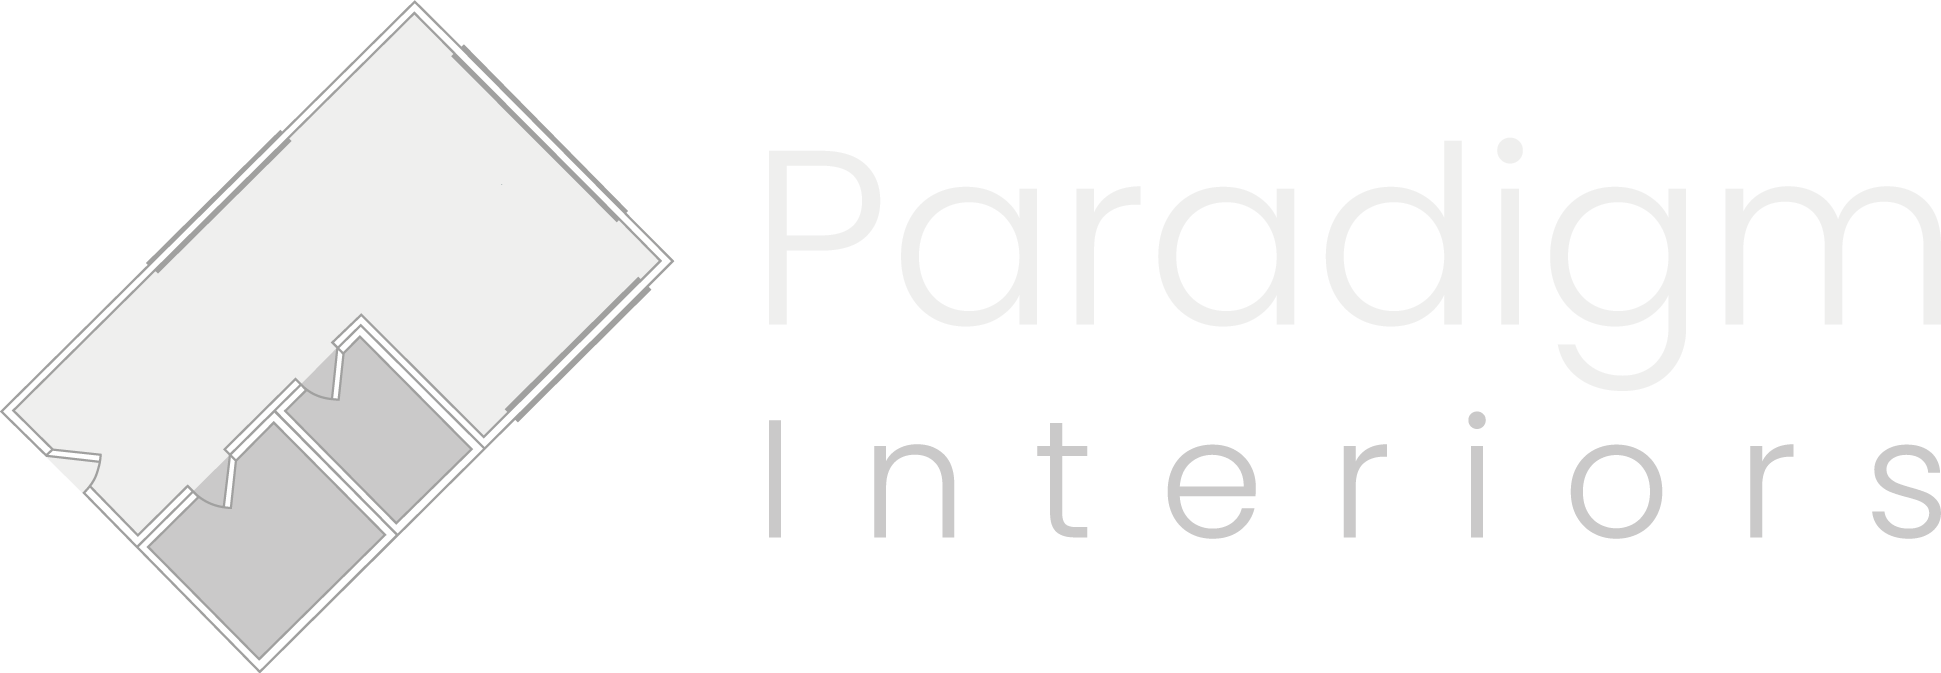 Paradigm Interior - Logo x2 - light